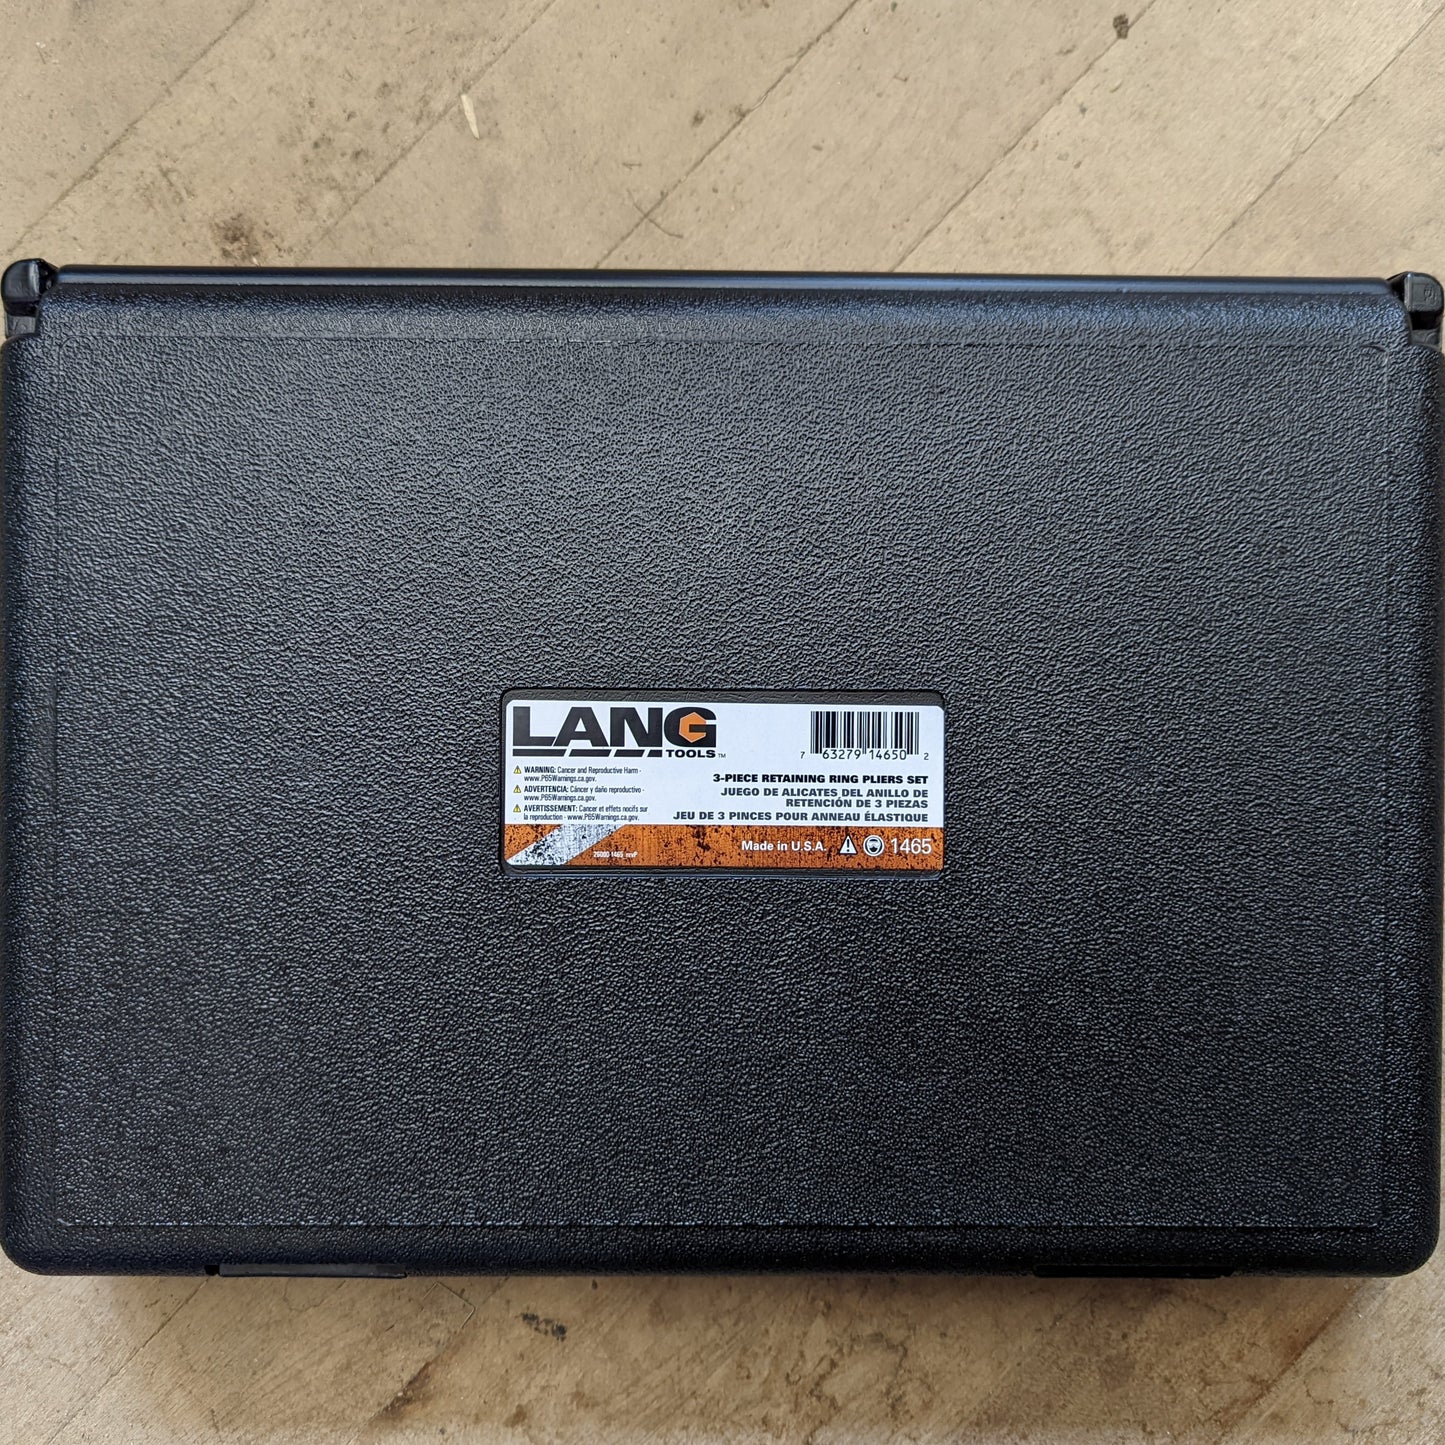 Lang 3-Piece Plier Set (044-91465-0420)